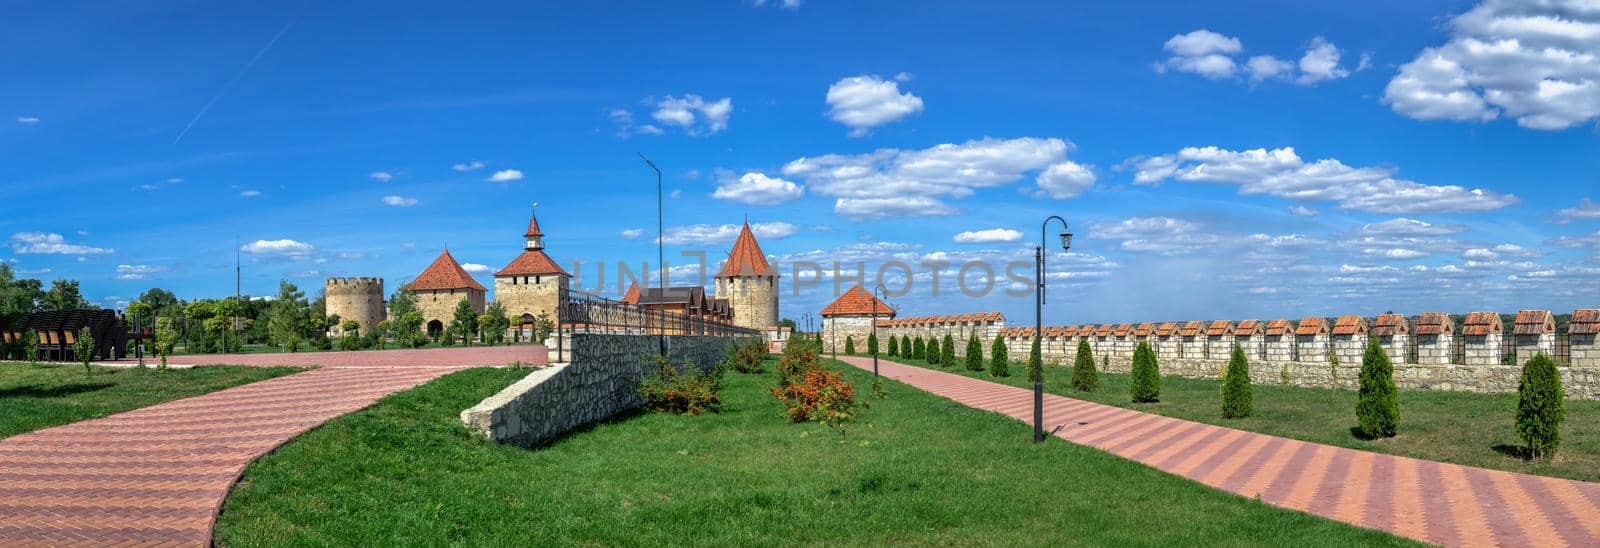 Alexander Nevsky Park in Bender, Moldova by Multipedia